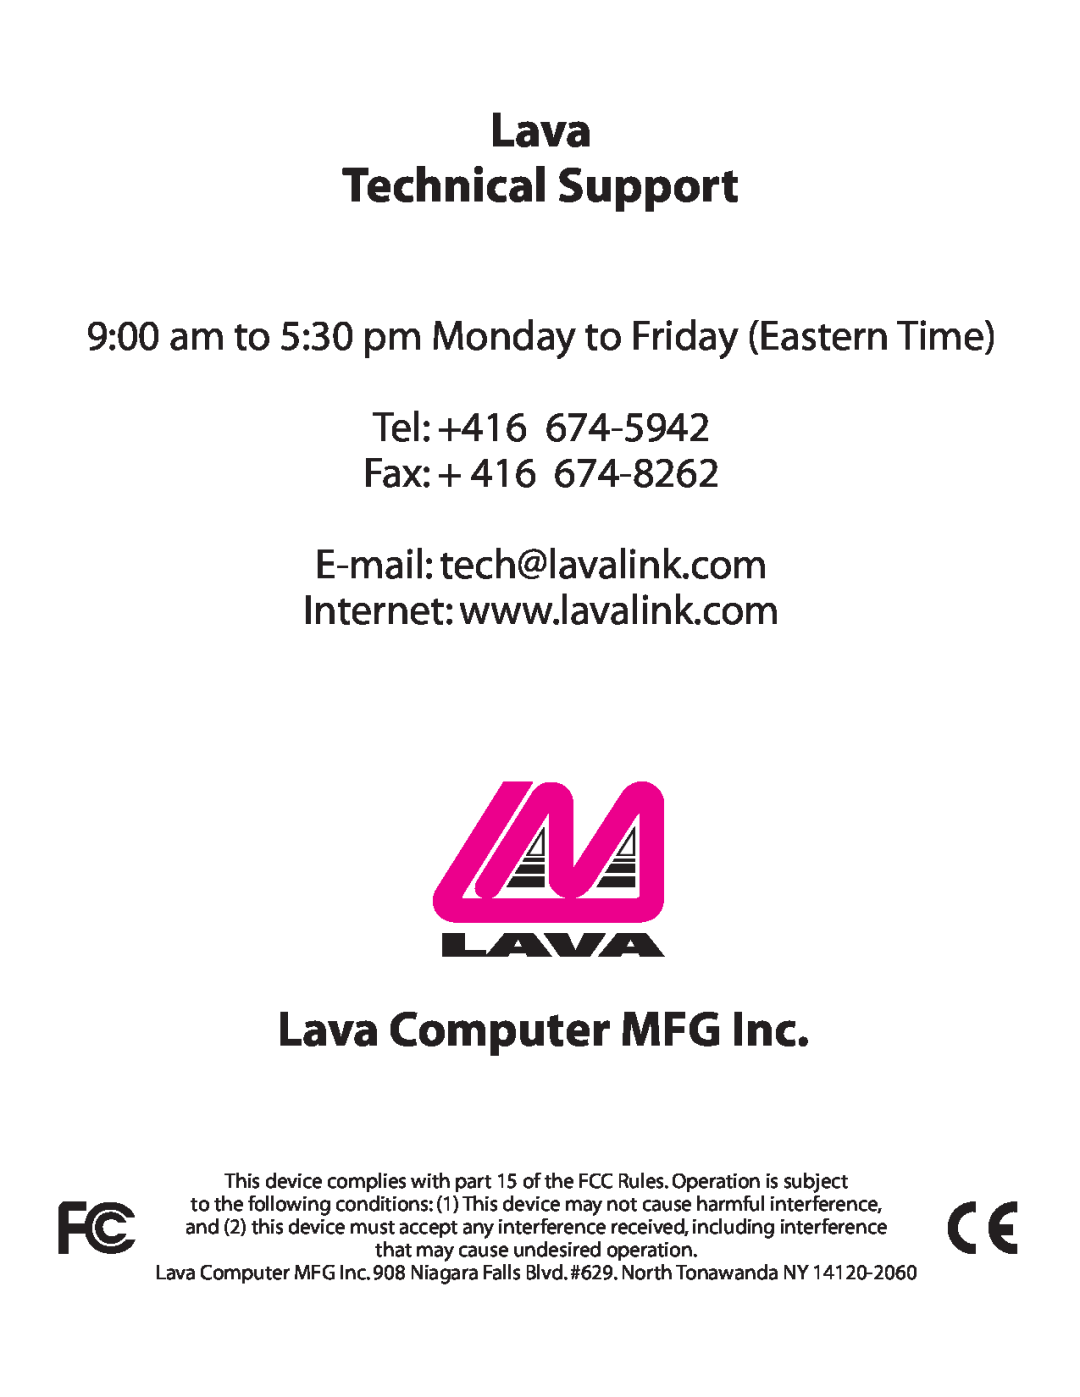 Lava Computer DSerial-550 installation manual Lava Technical Support, Lava Computer MFG Inc, E-mail tech@lavalink.com 